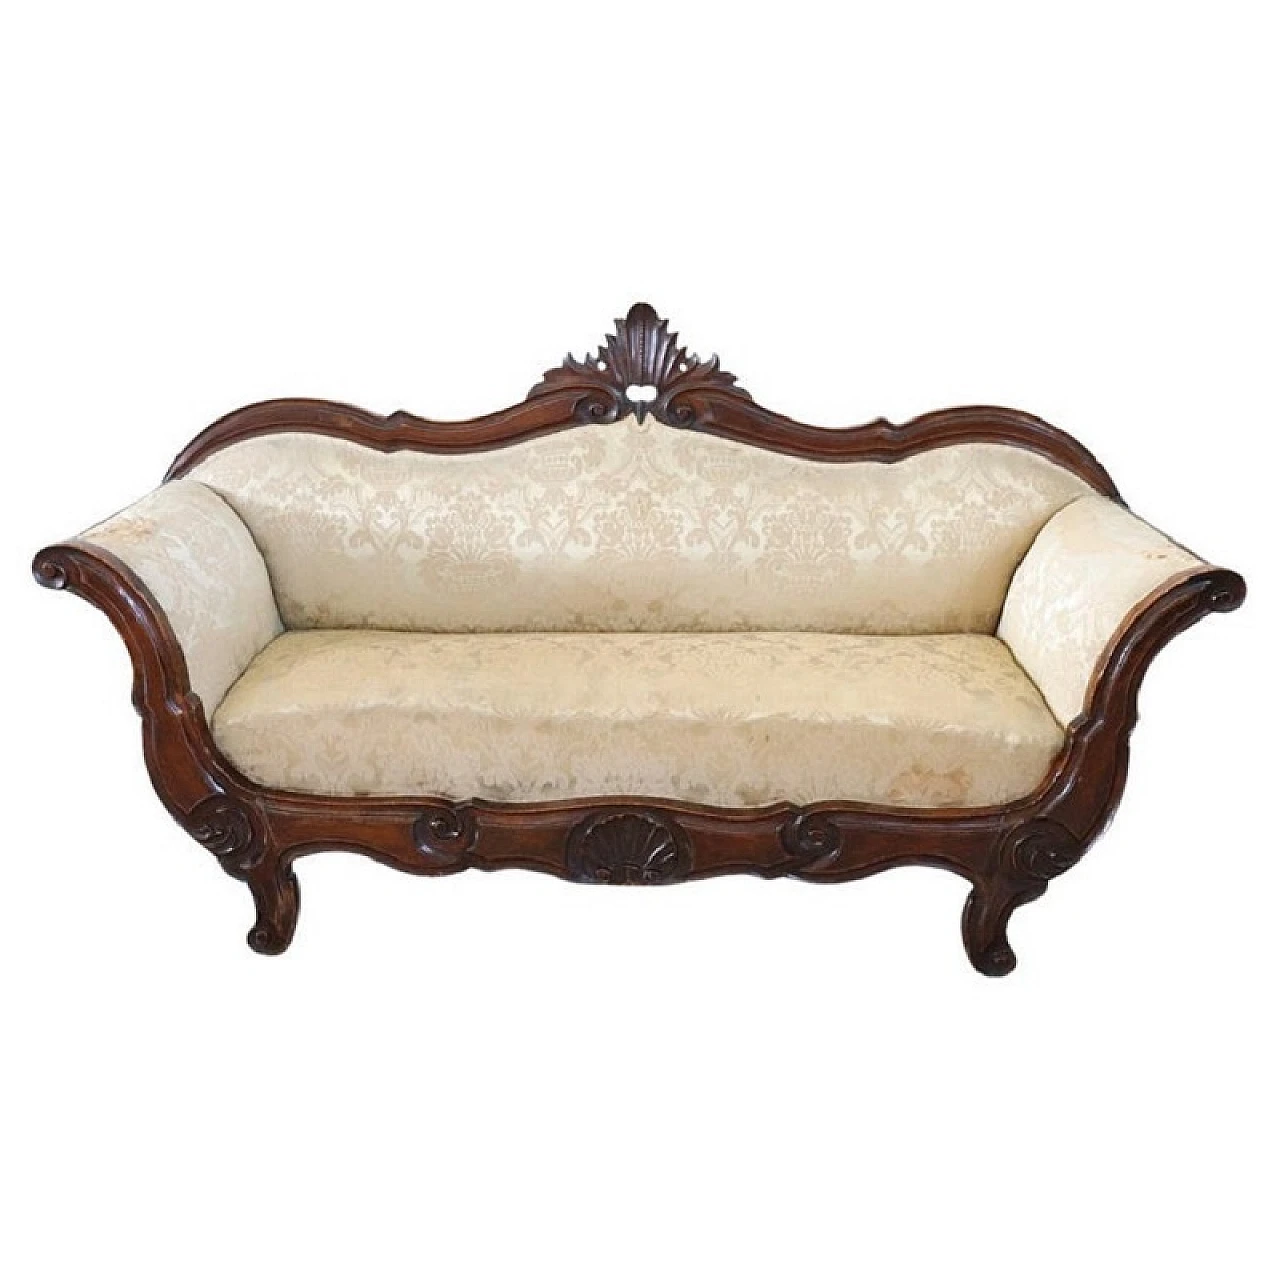 Hand-carved walnut wood sofa and brocade fabric, 19th century 1